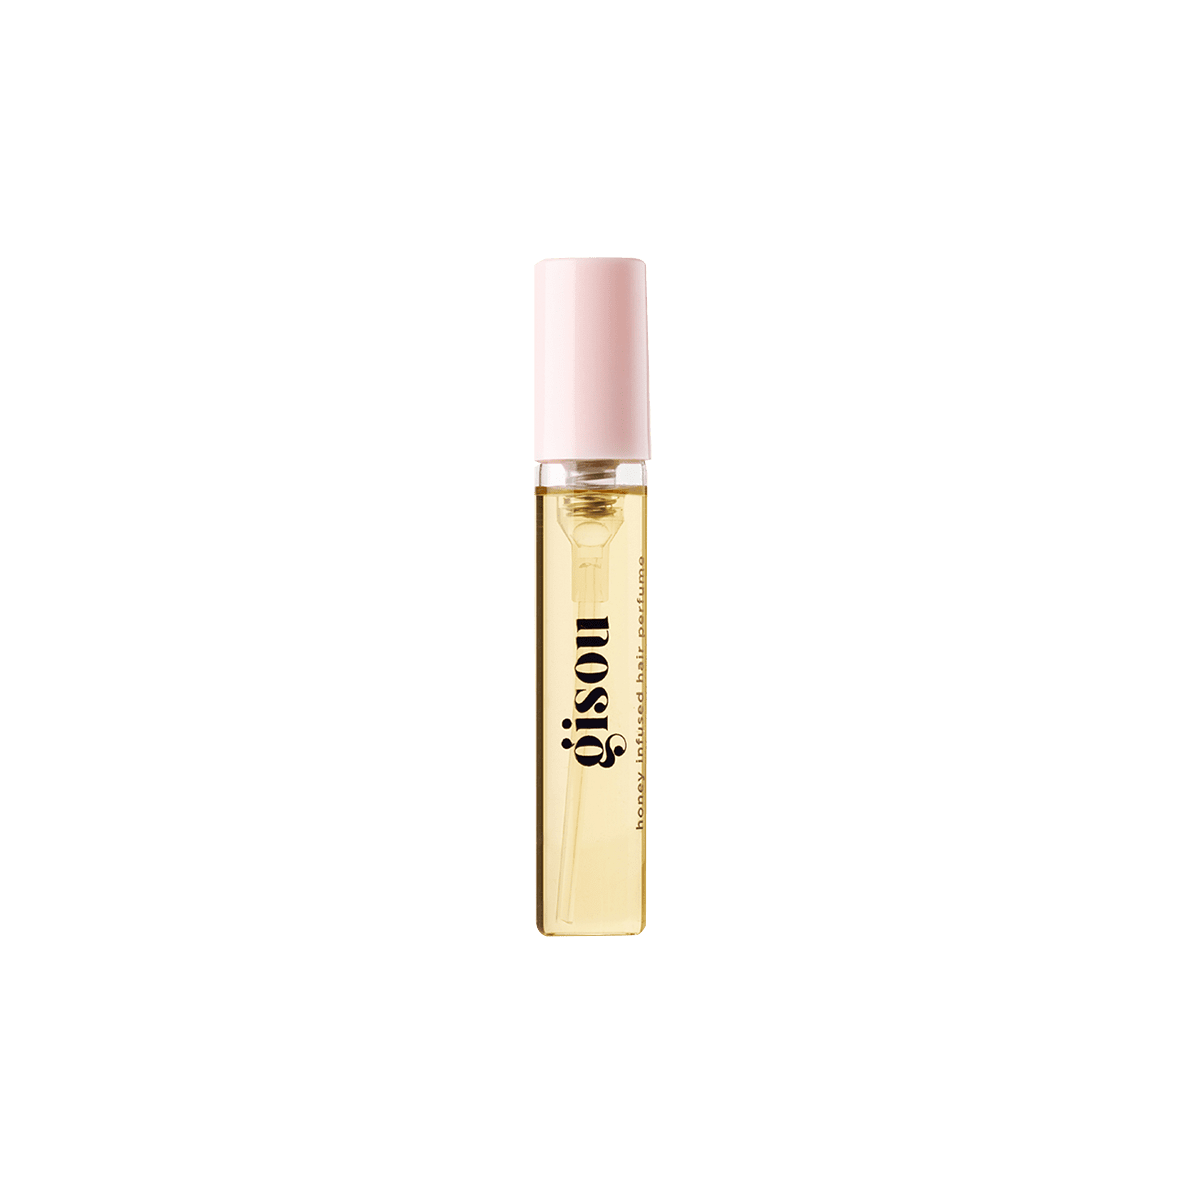 Hair Perfume Sample – Gisou